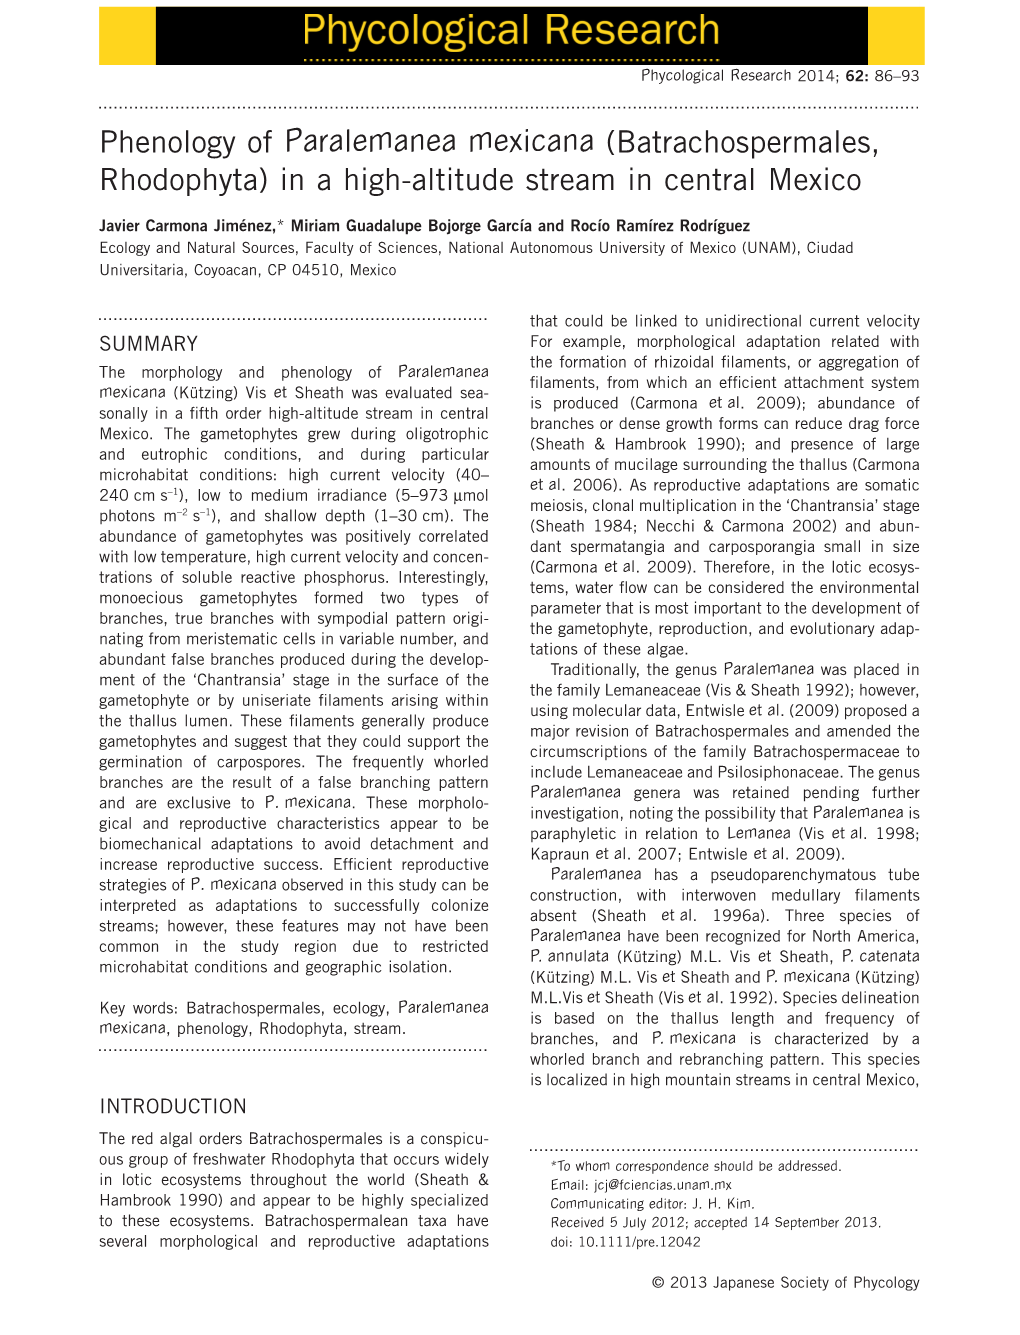 Phenology of Paralemanea Mexicana (Batrachospermales, Rhodophyta) in a High-Altitude Stream in Central Mexico